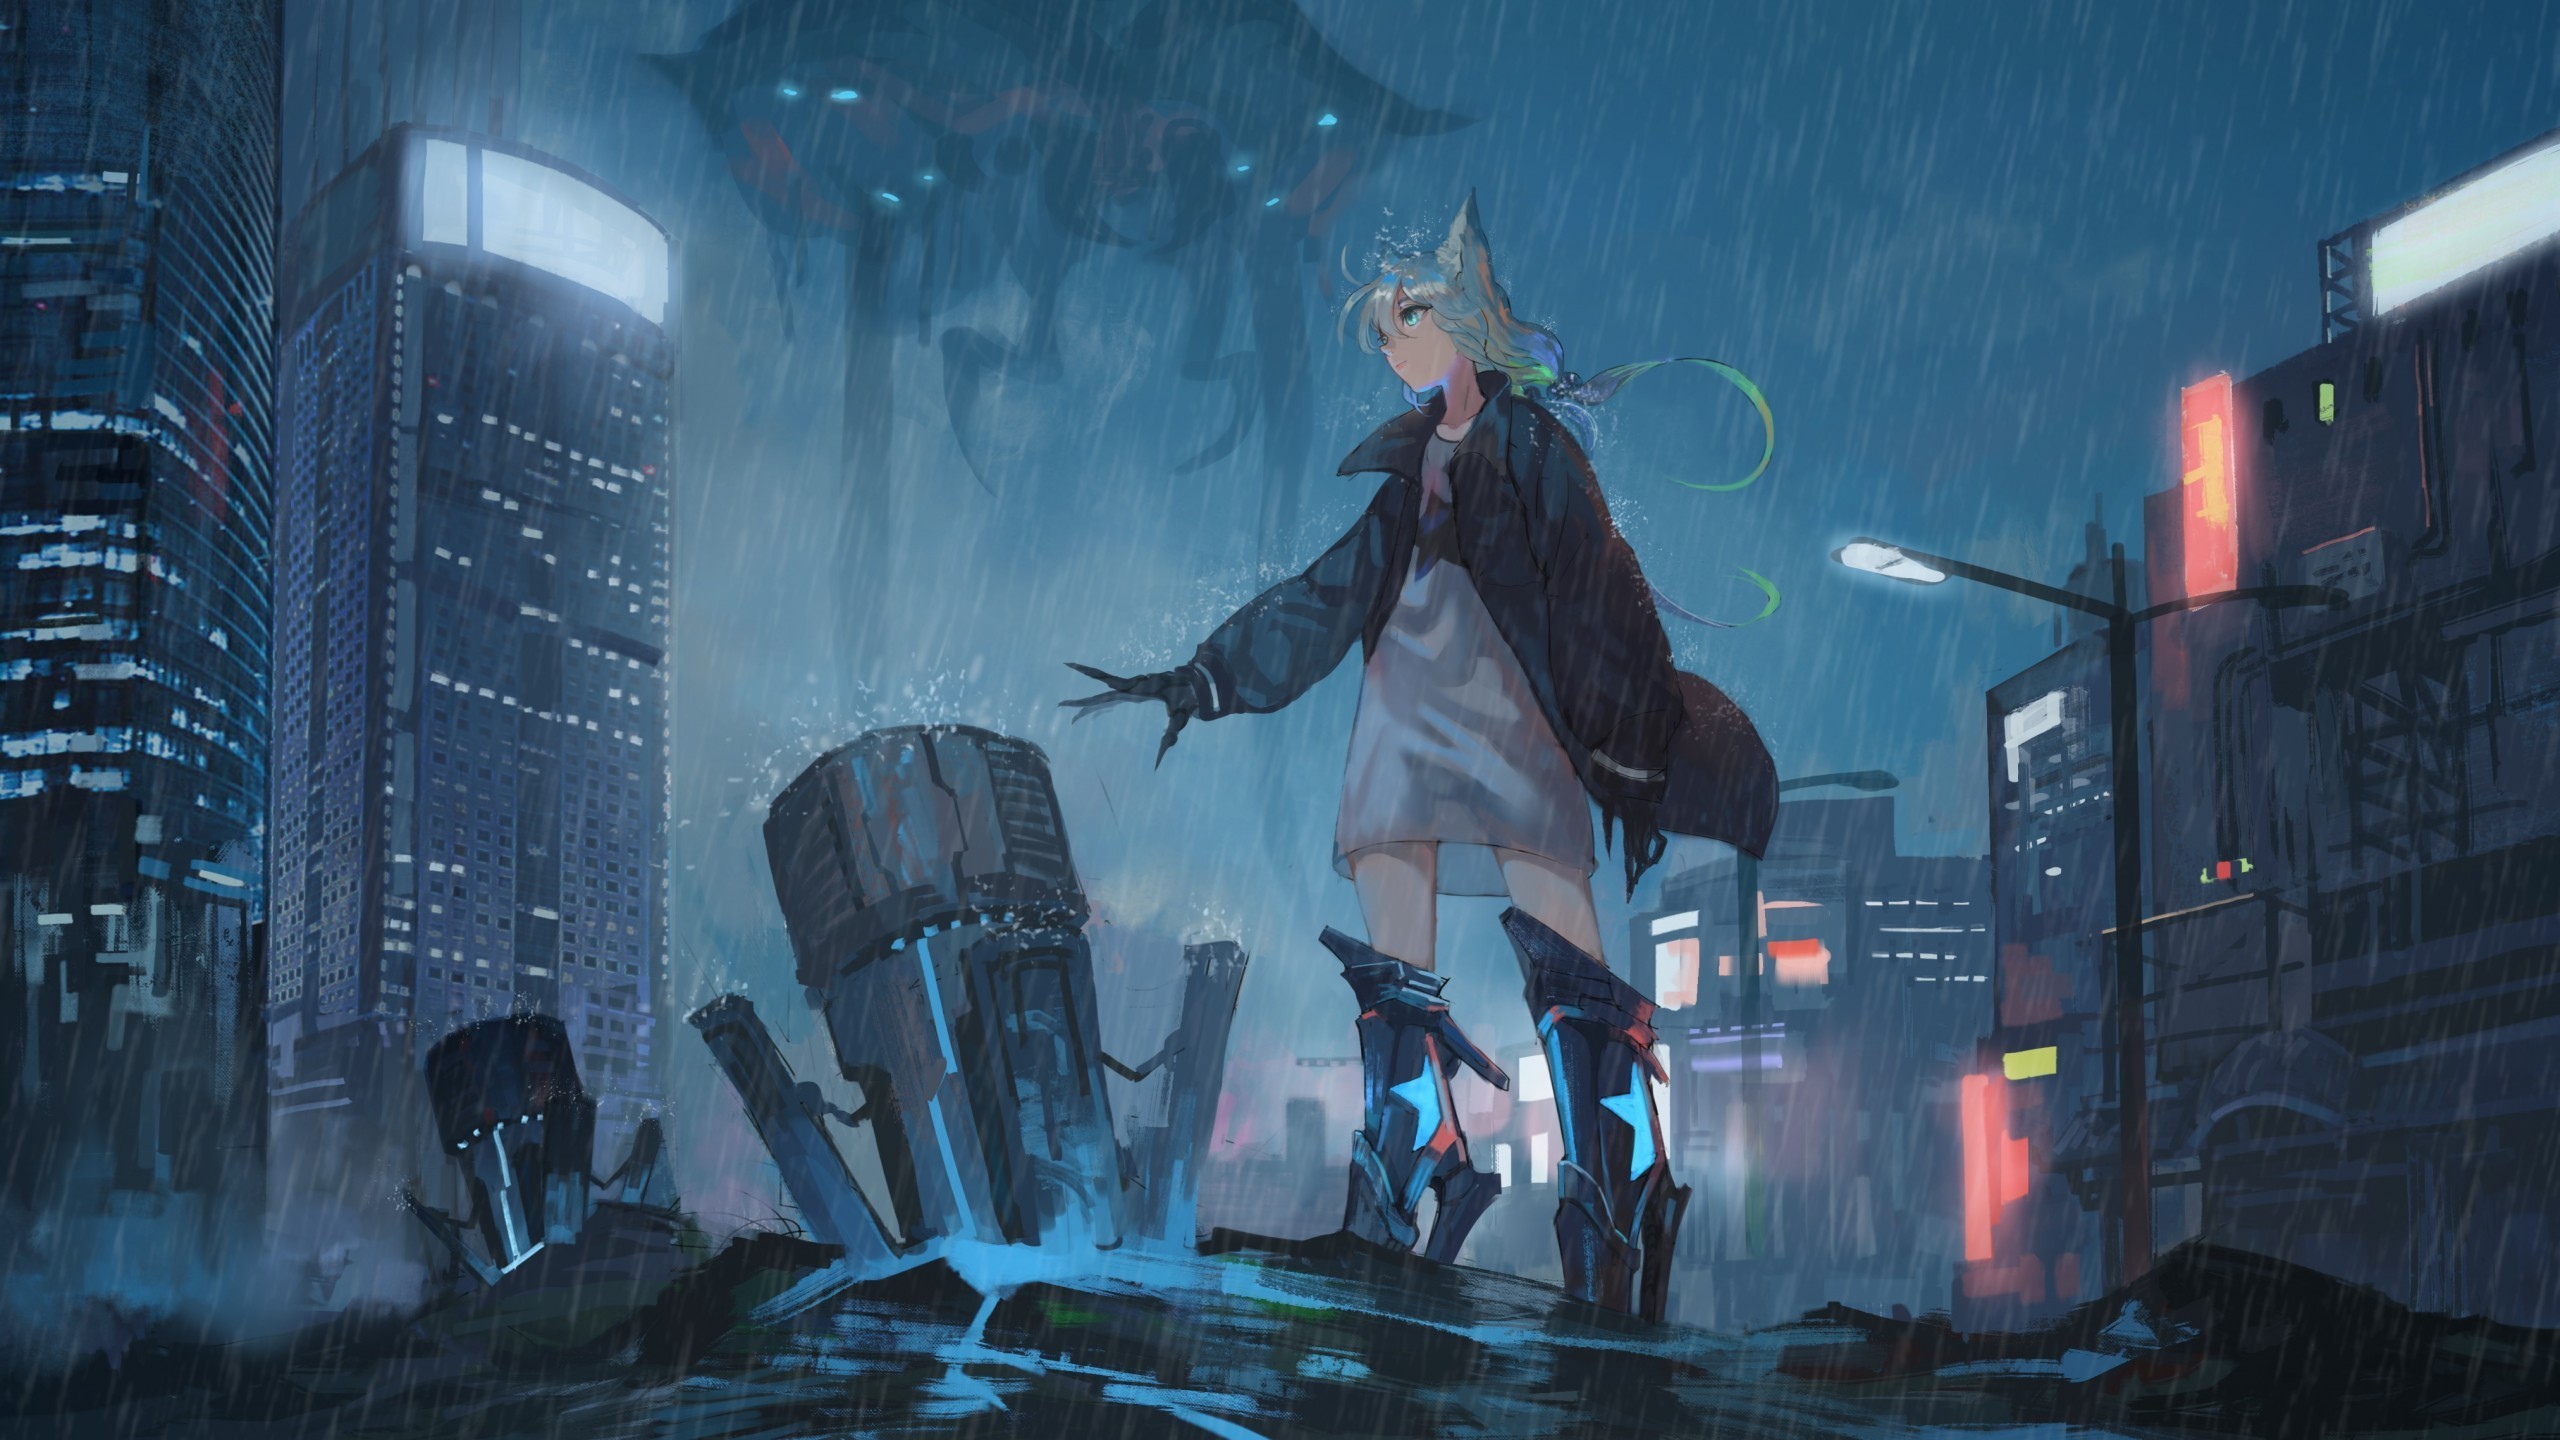 2560x1440 Anime Girl, Apocalypse, Alien Invasion, Raining, Futuristic, Sci-fi